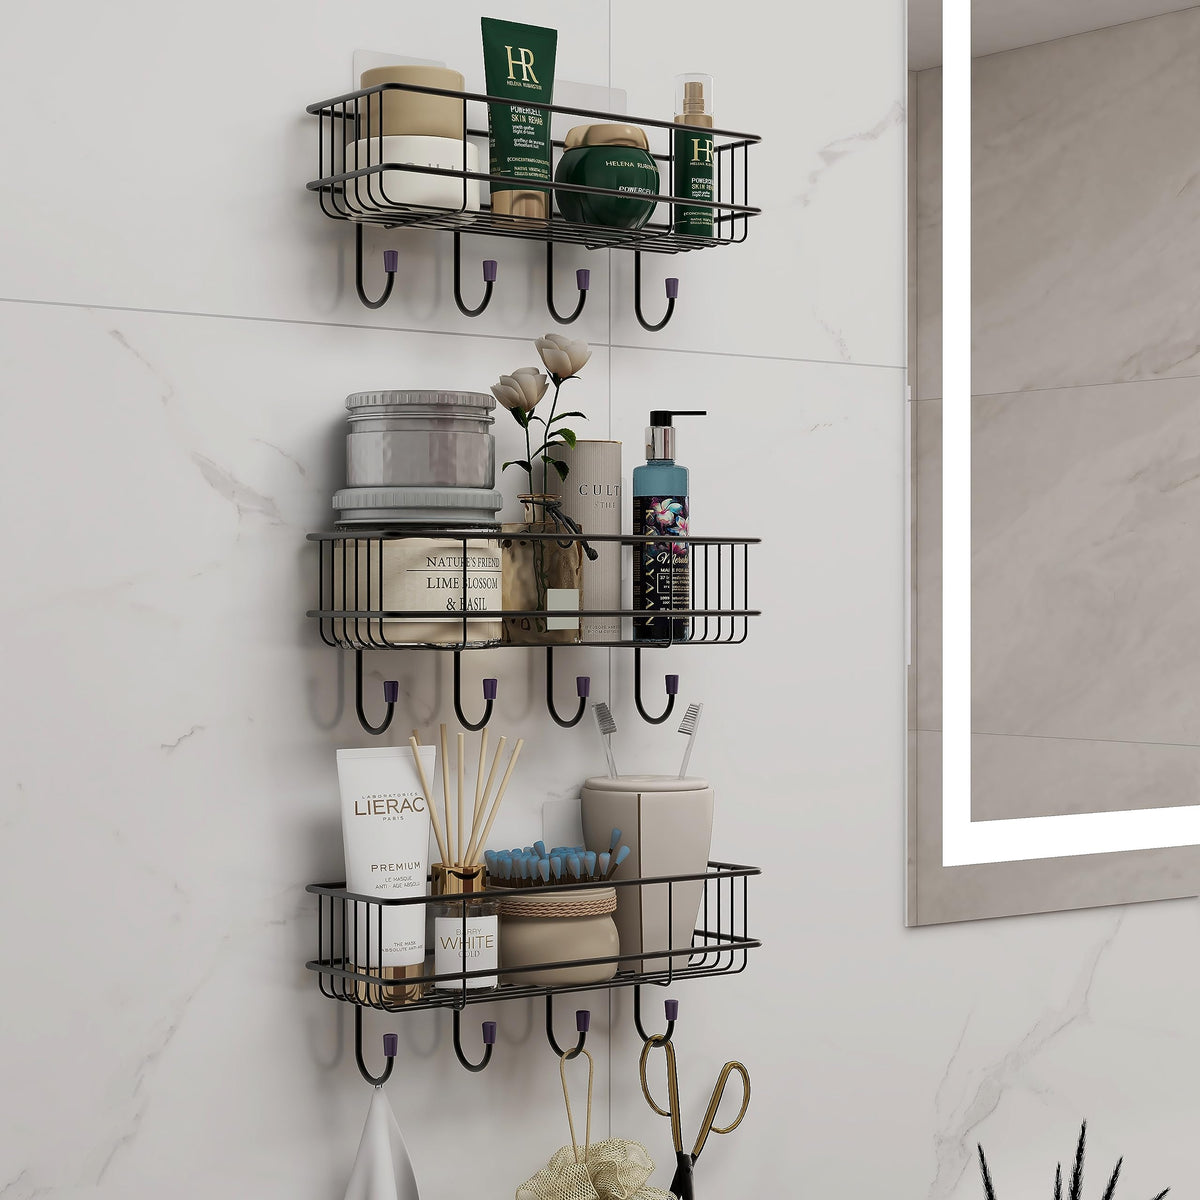 Plantex GI Steel Self-Adhesive Multipurpose Bathroom Shelf with Hooks/Towel Holder/Rack/Bathroom Accessories - Wall Mount - Pack of 3 (Black,Powder Coated)